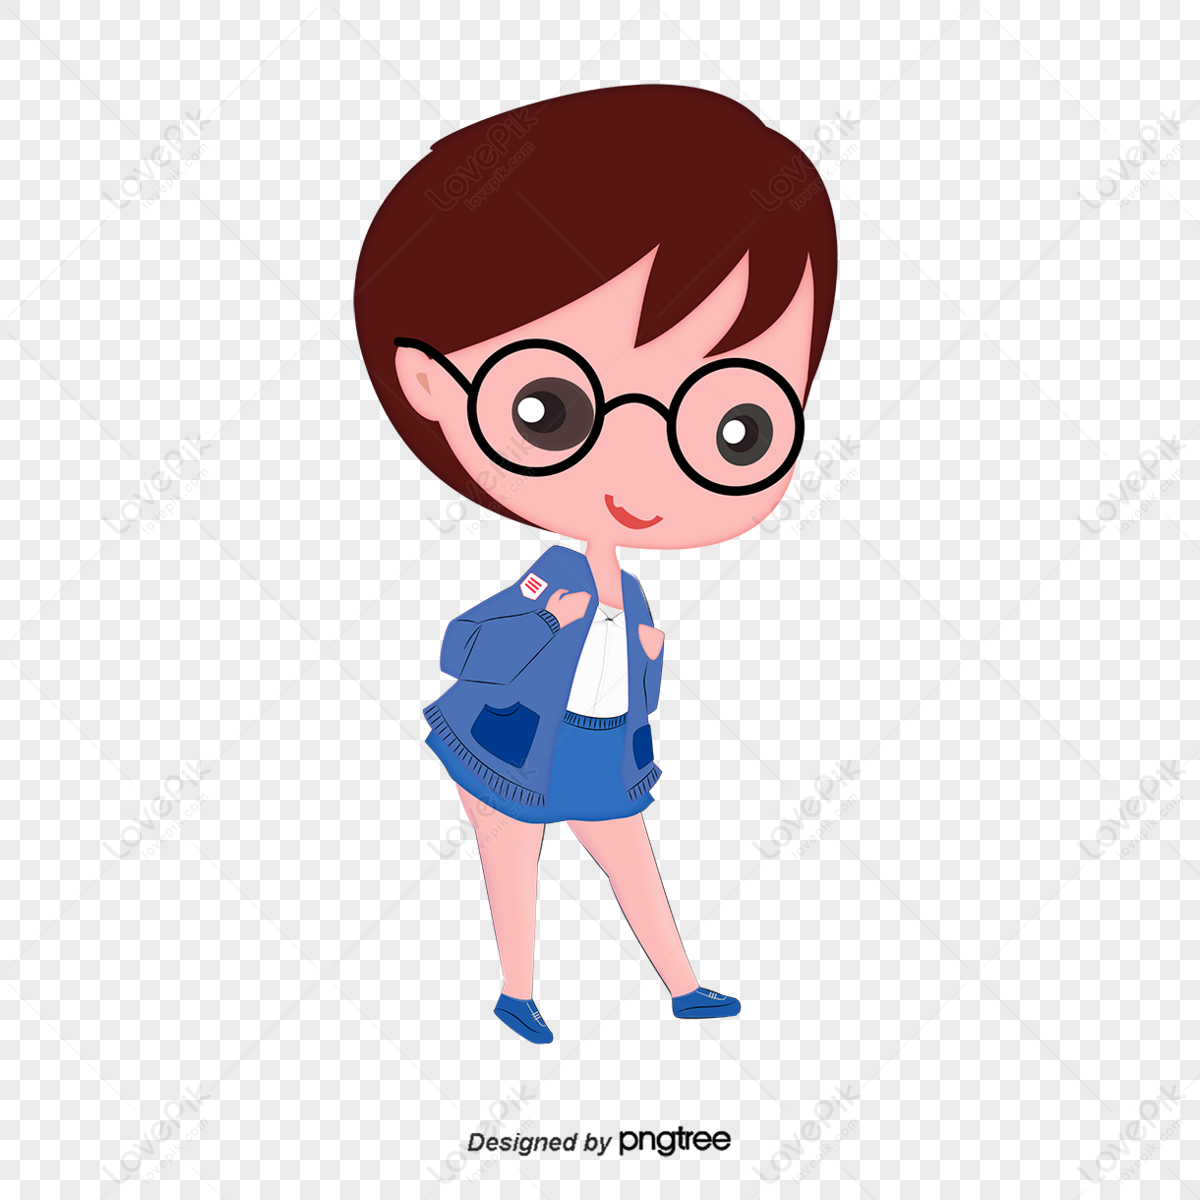 Cartoon Little Girl With Glasses,wear,girls,wear Glasses PNG Hd ...